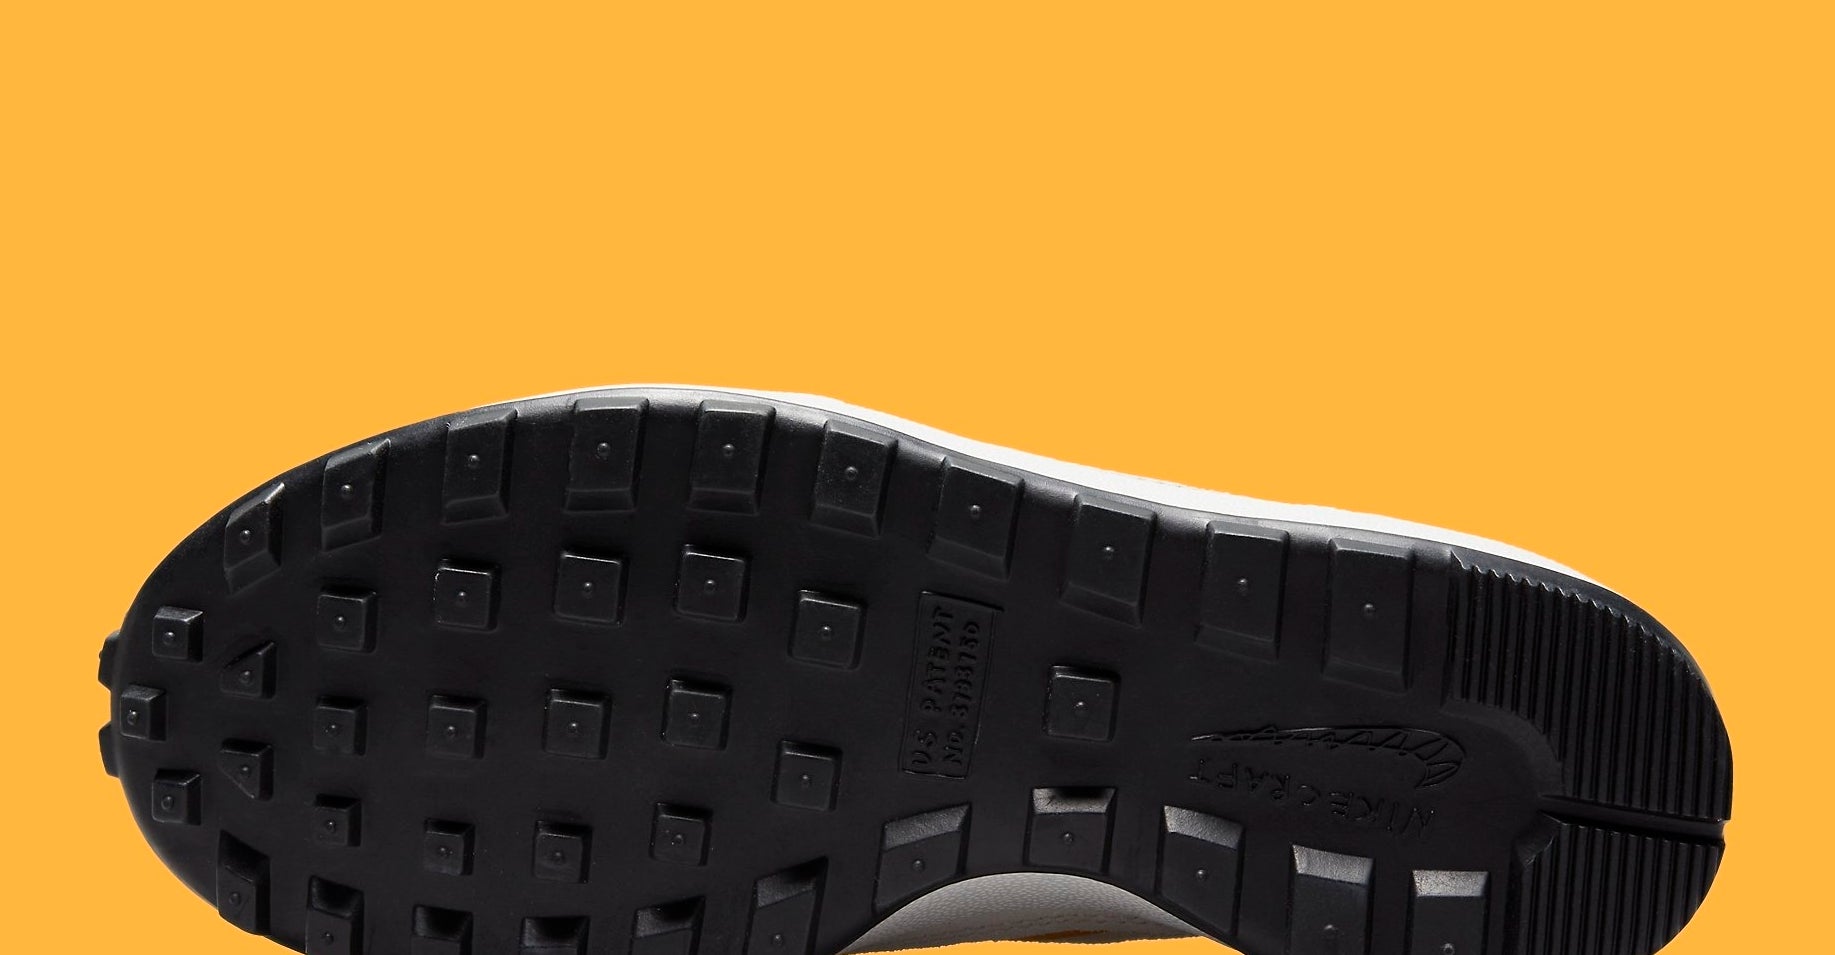 Tom Sachs x NikeCraft General Purpose Shoe “Summit White”